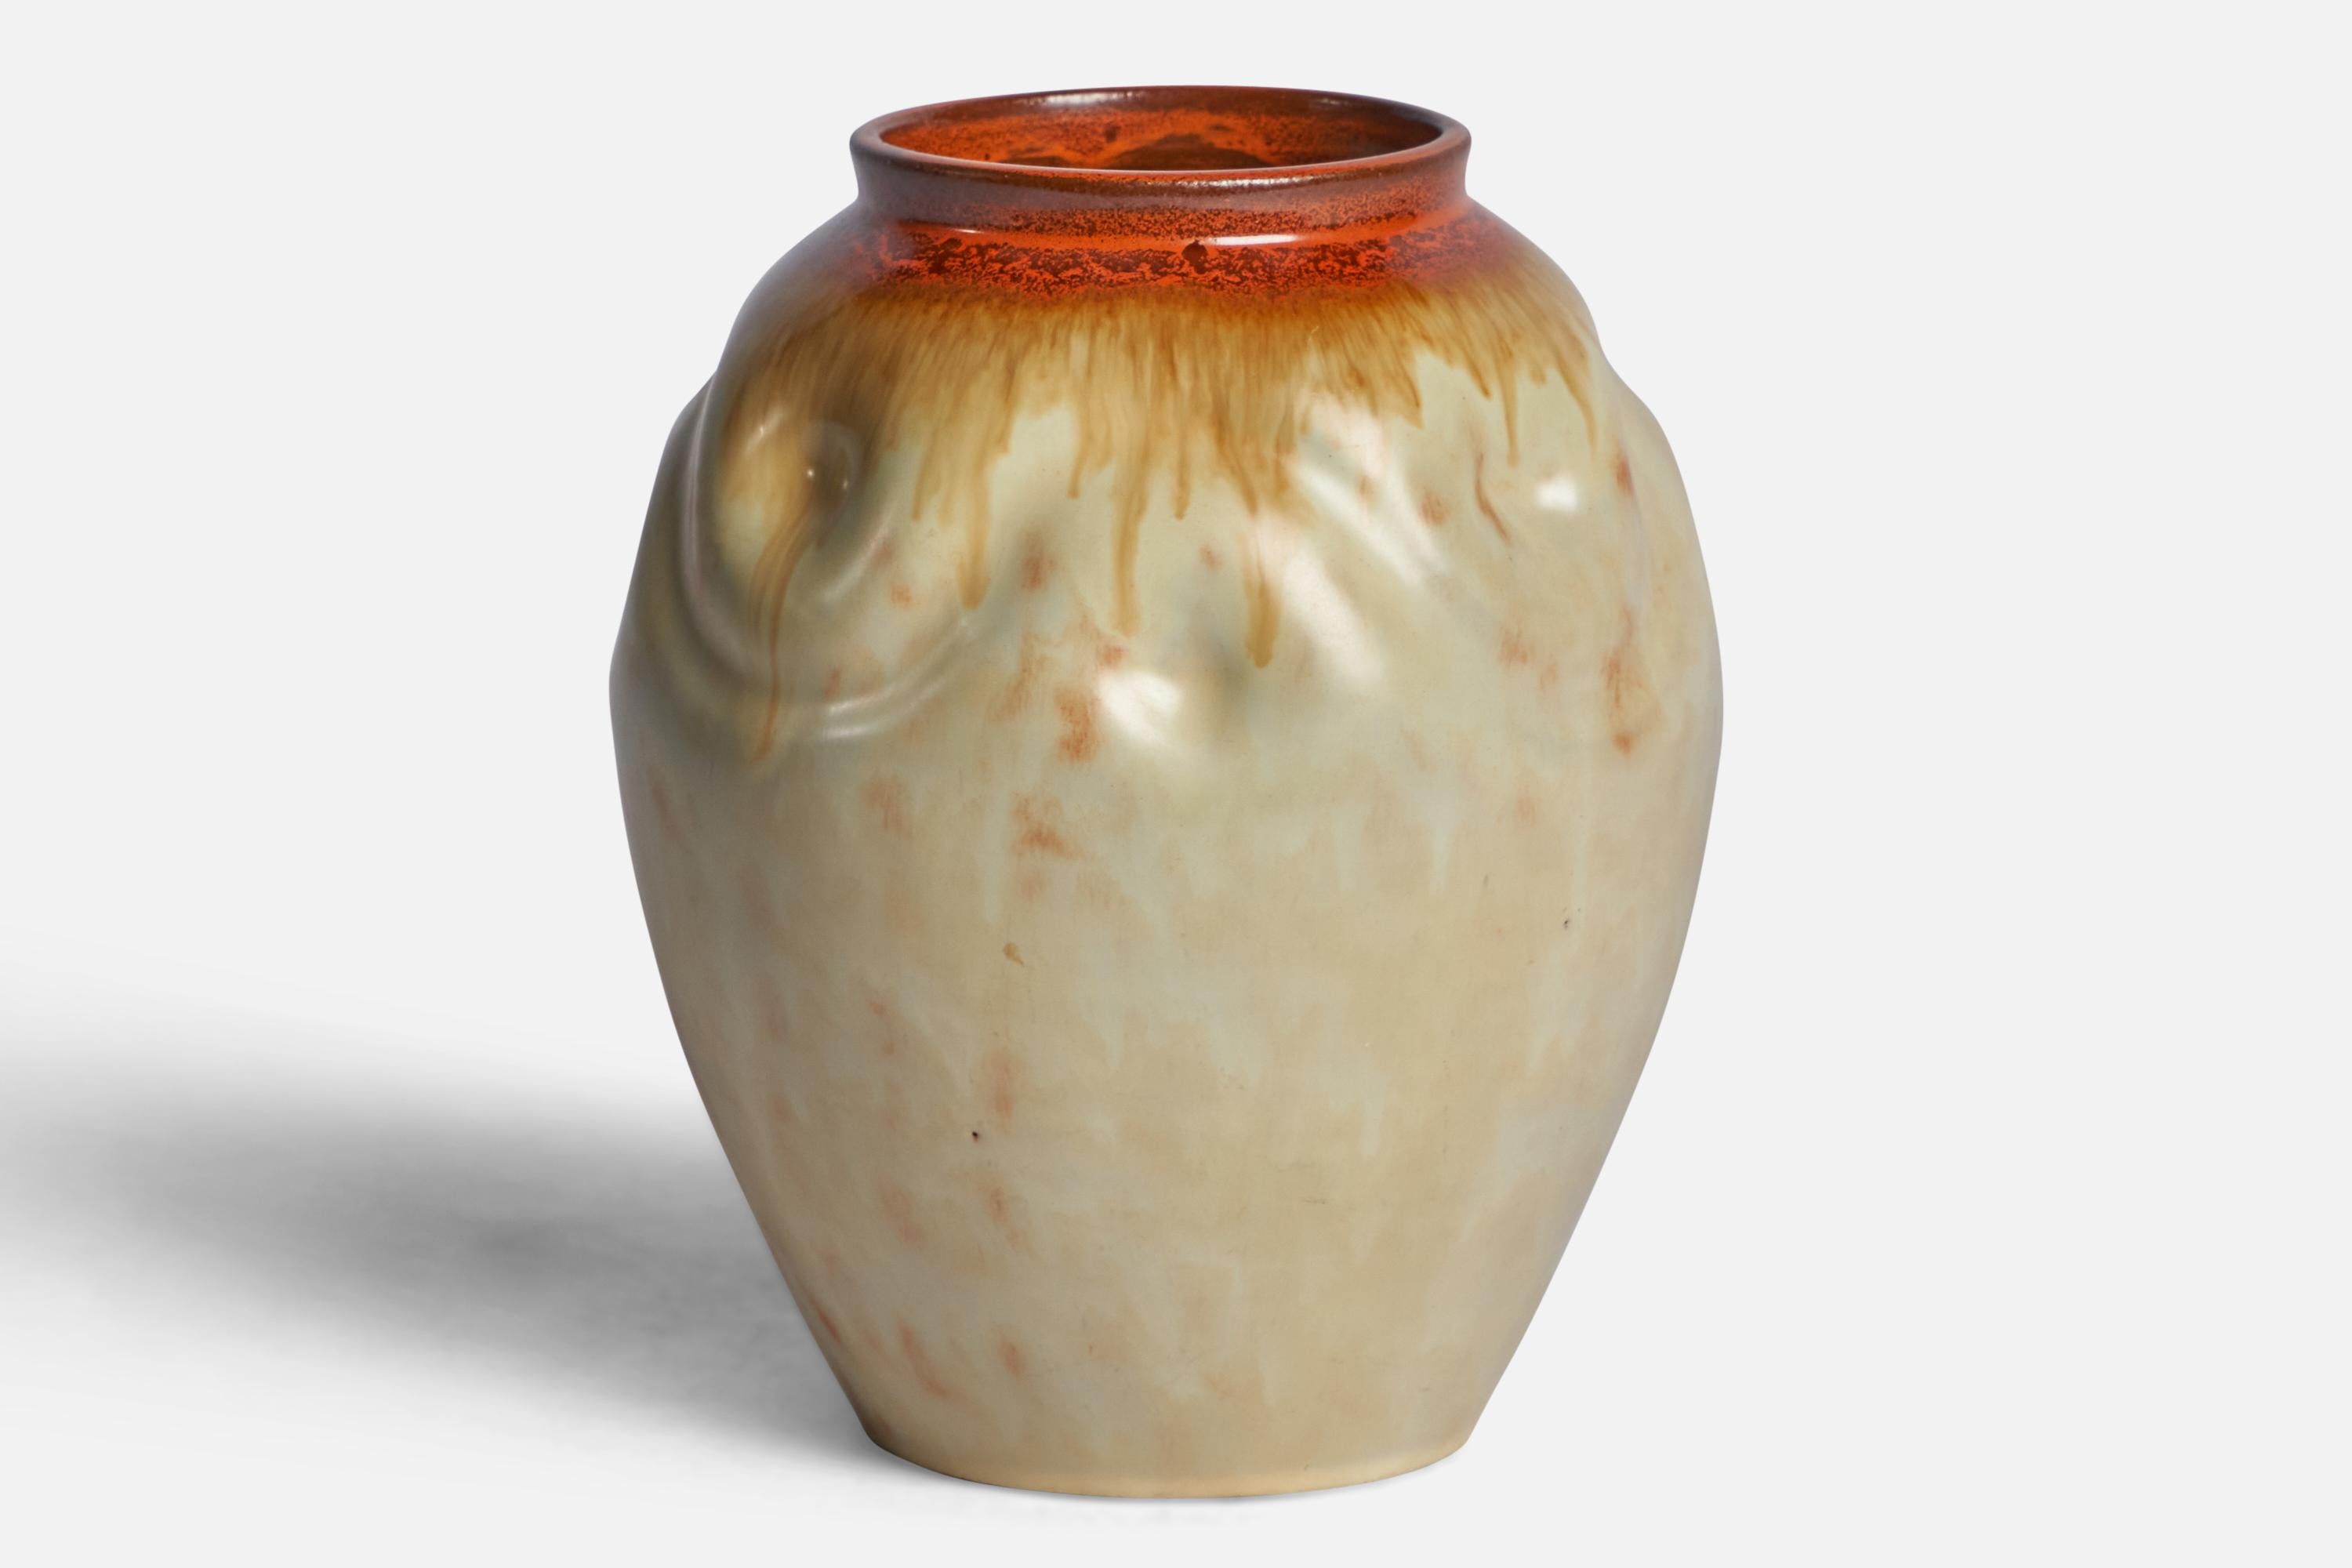 A beige and orange-glazed incised earthenware vase designed and produced by Upsala Ekeby, Sweden, 1930s.